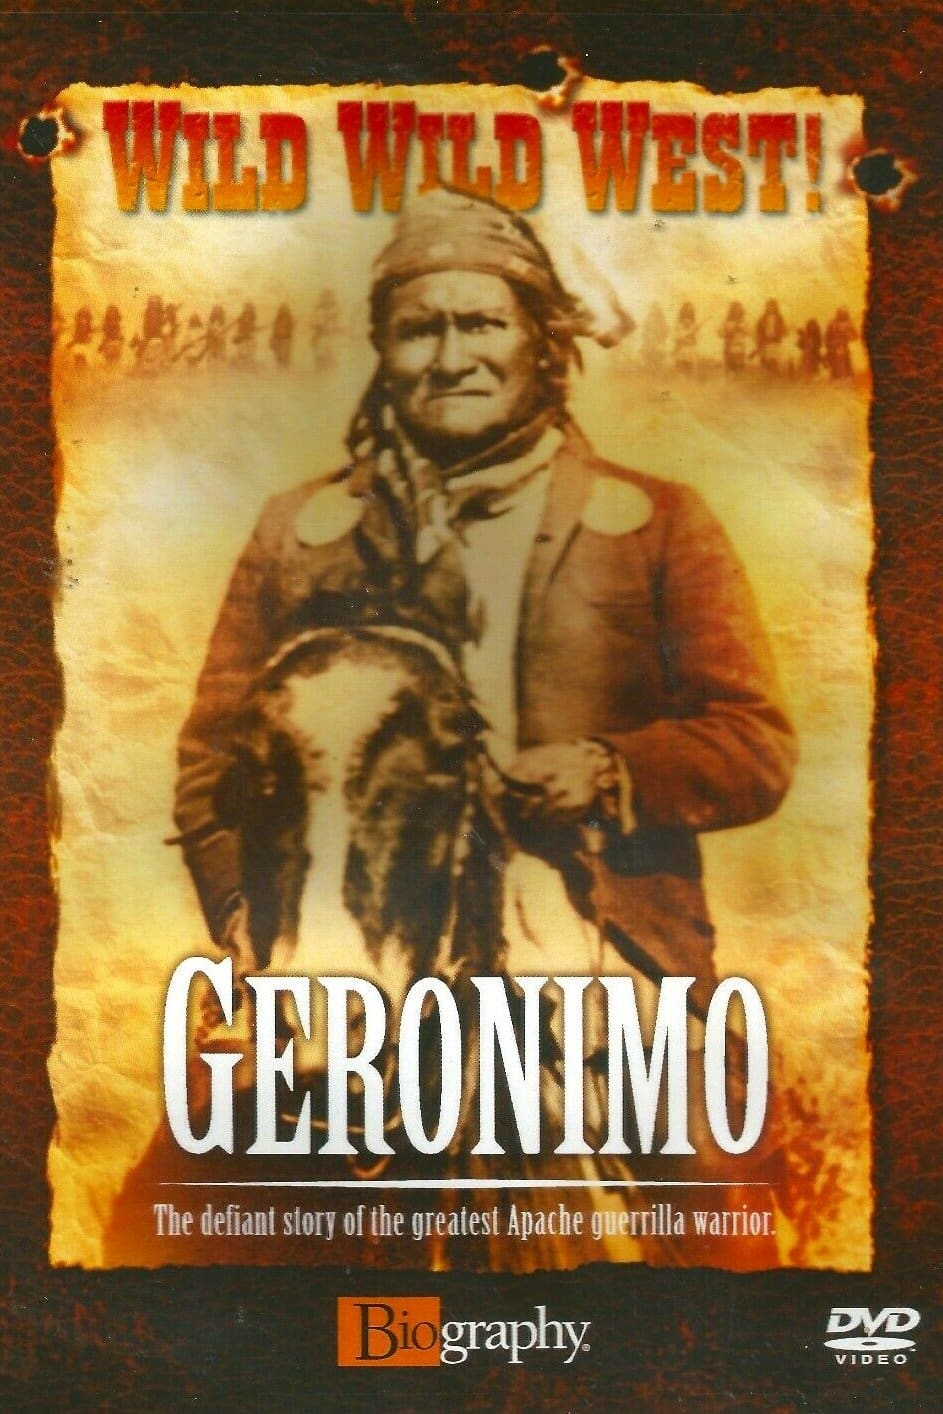 Wild Wild West: Geronimo